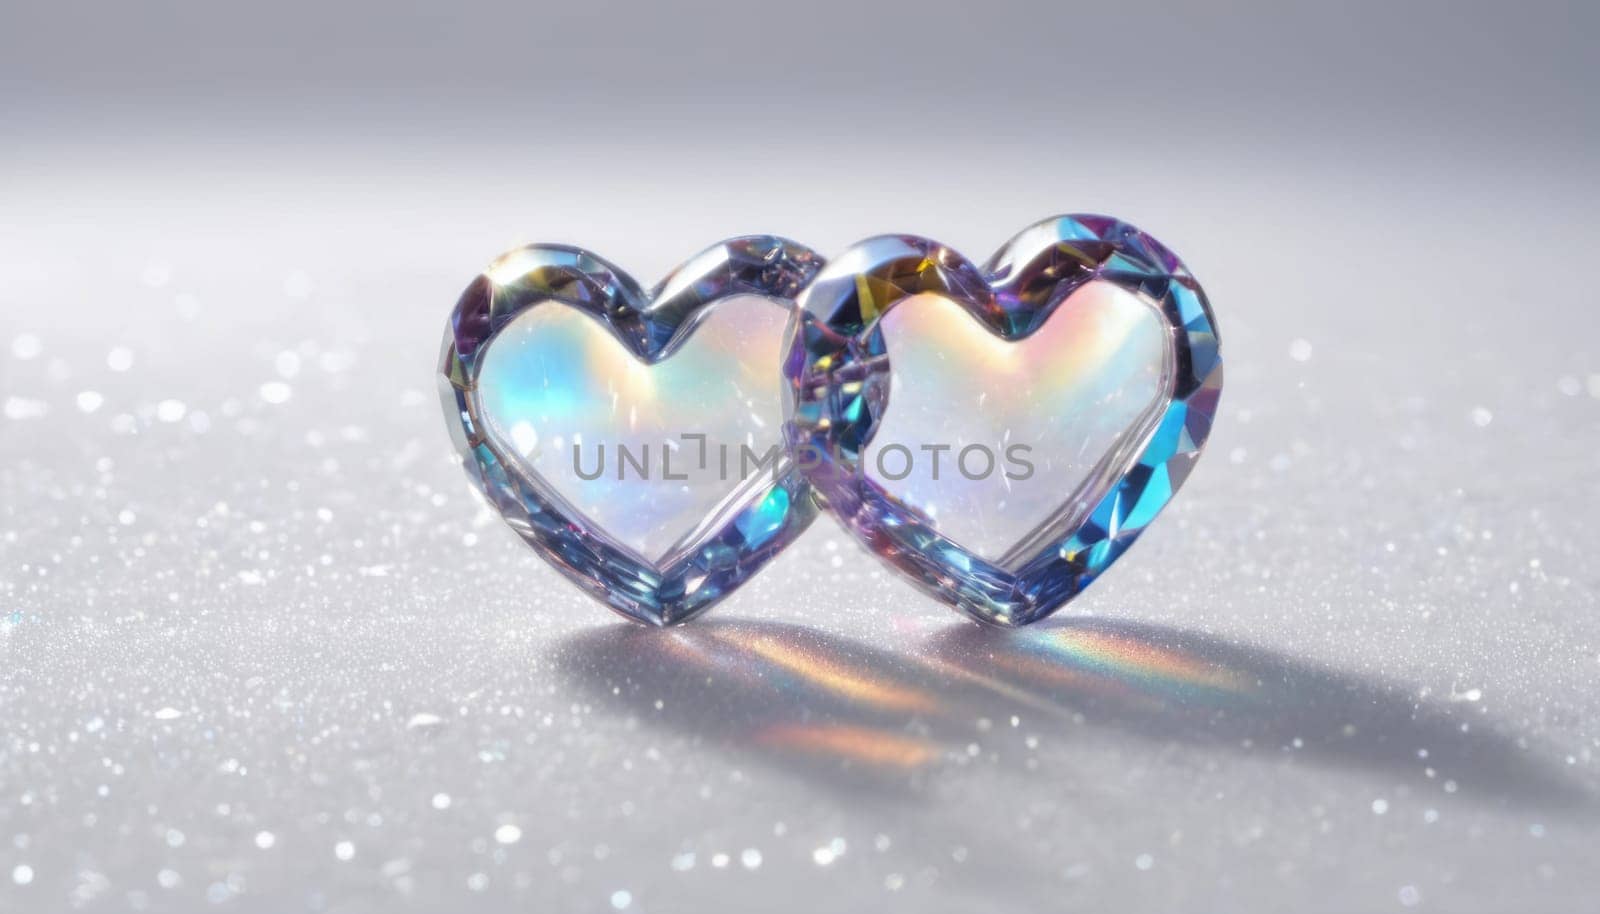 Rainbow Hearts Amidst Falling Crystals by nkotlyar